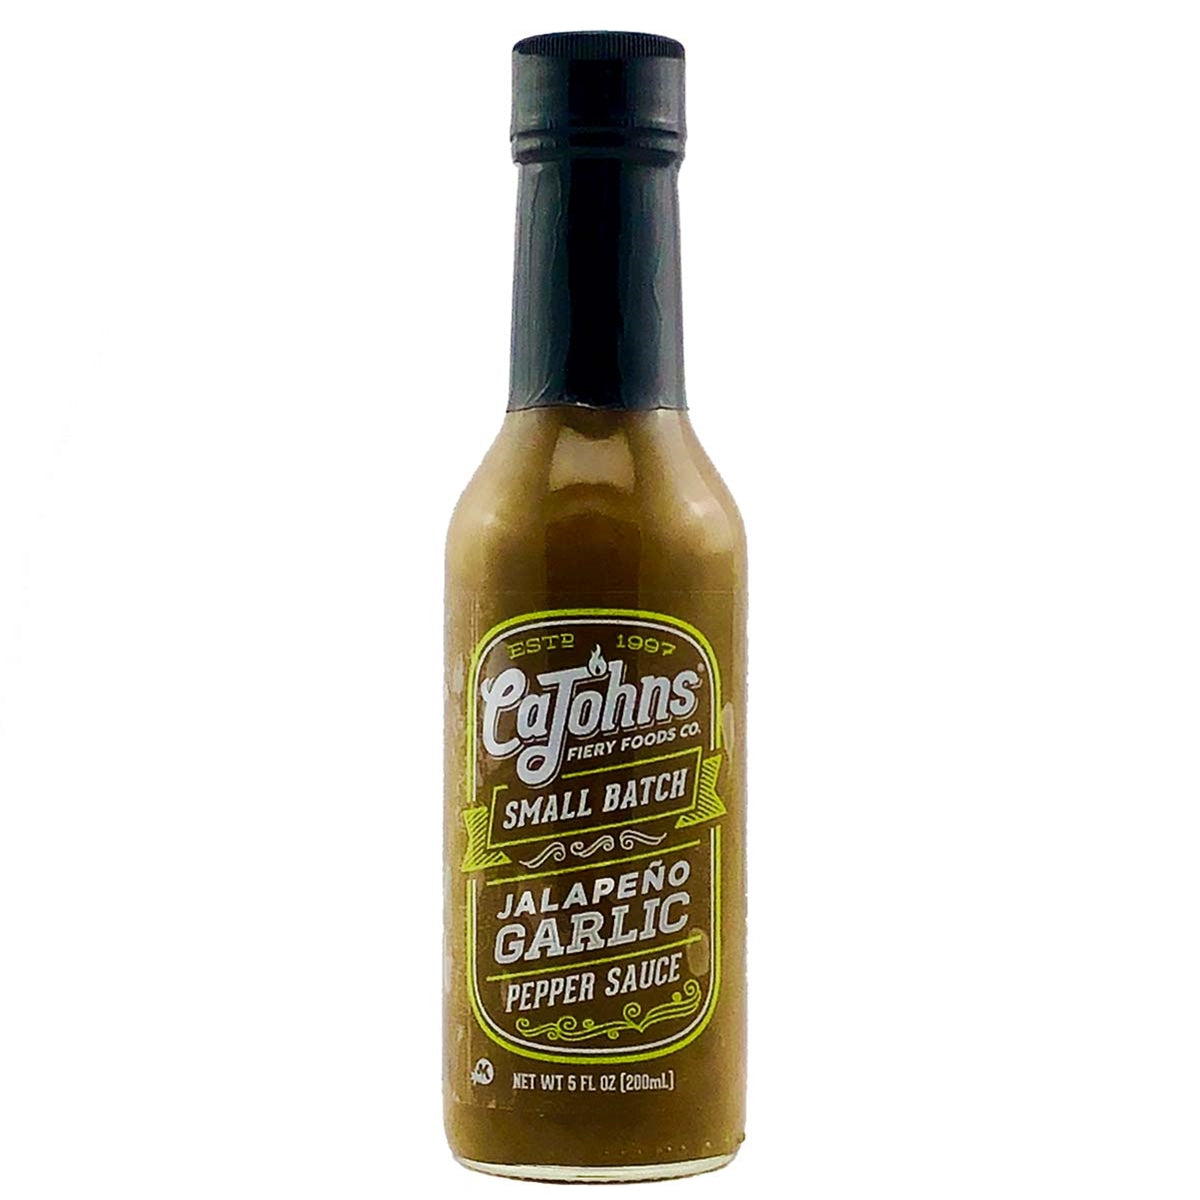 Cajohn's Small Batch Garlic Jalapeno Pepper Sauce